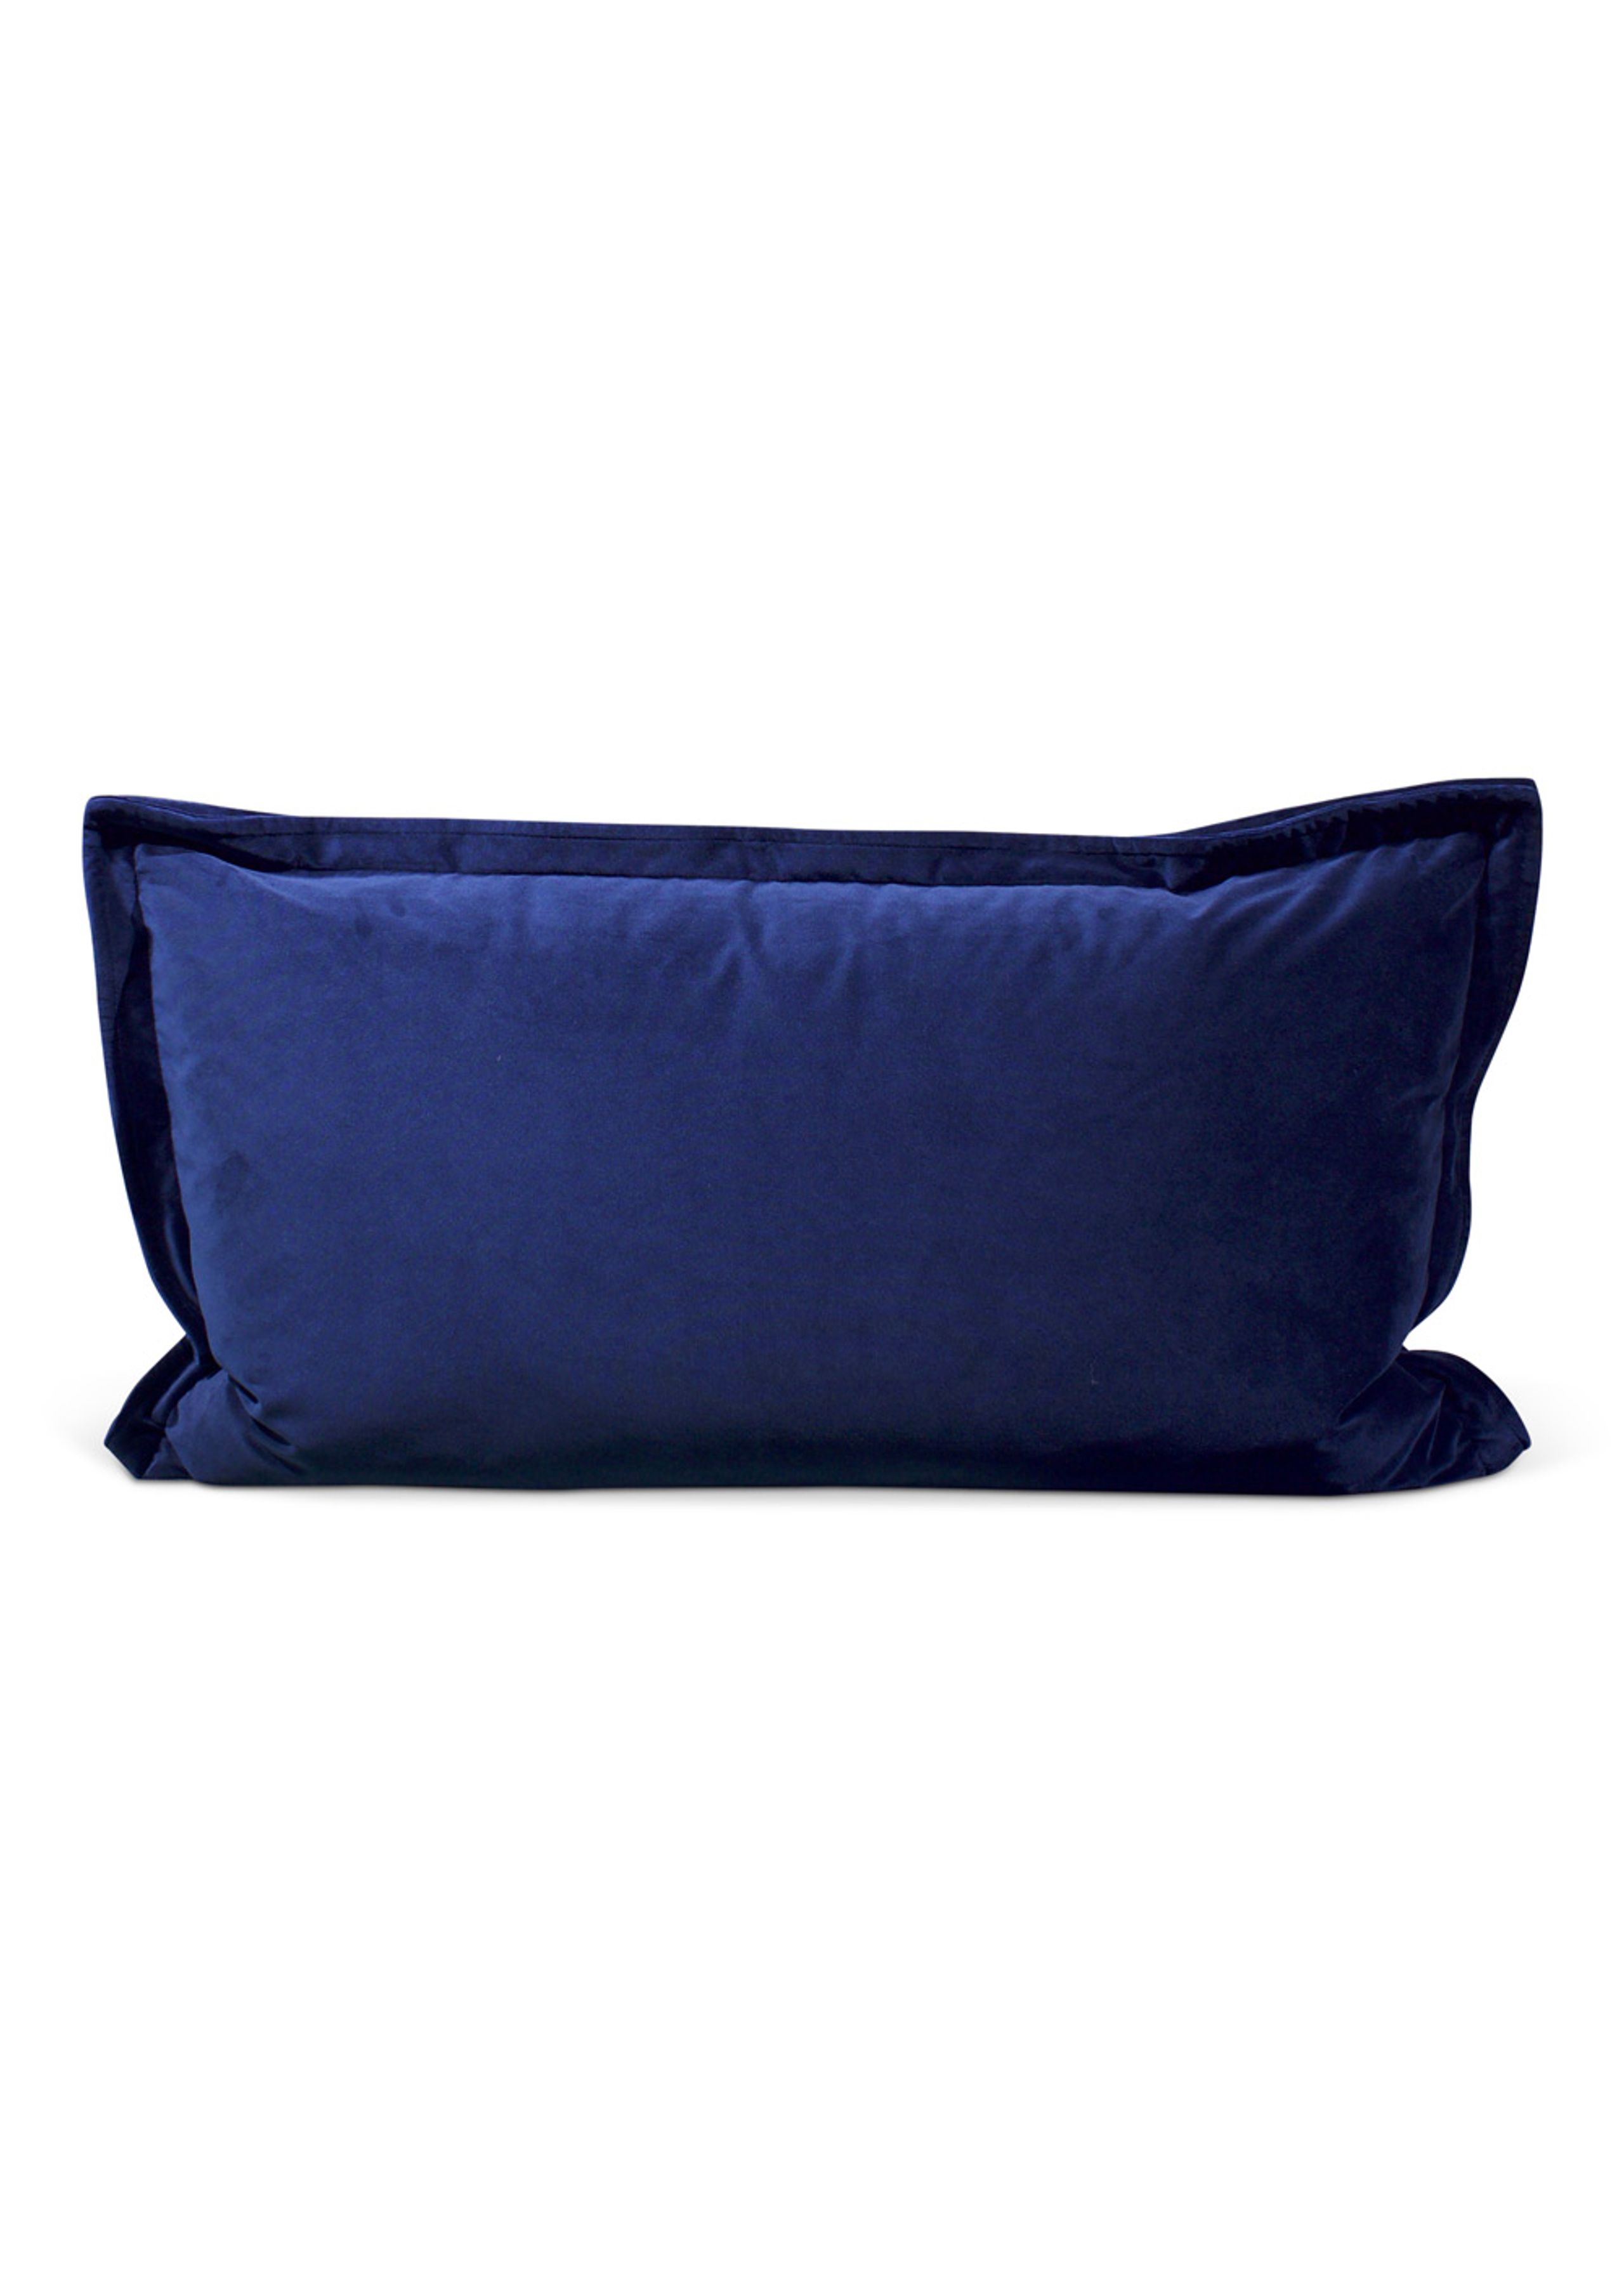 Handvärk - Coussin - The Modular Sofa - Loose Pillow by Emil Thorup - Royal blue